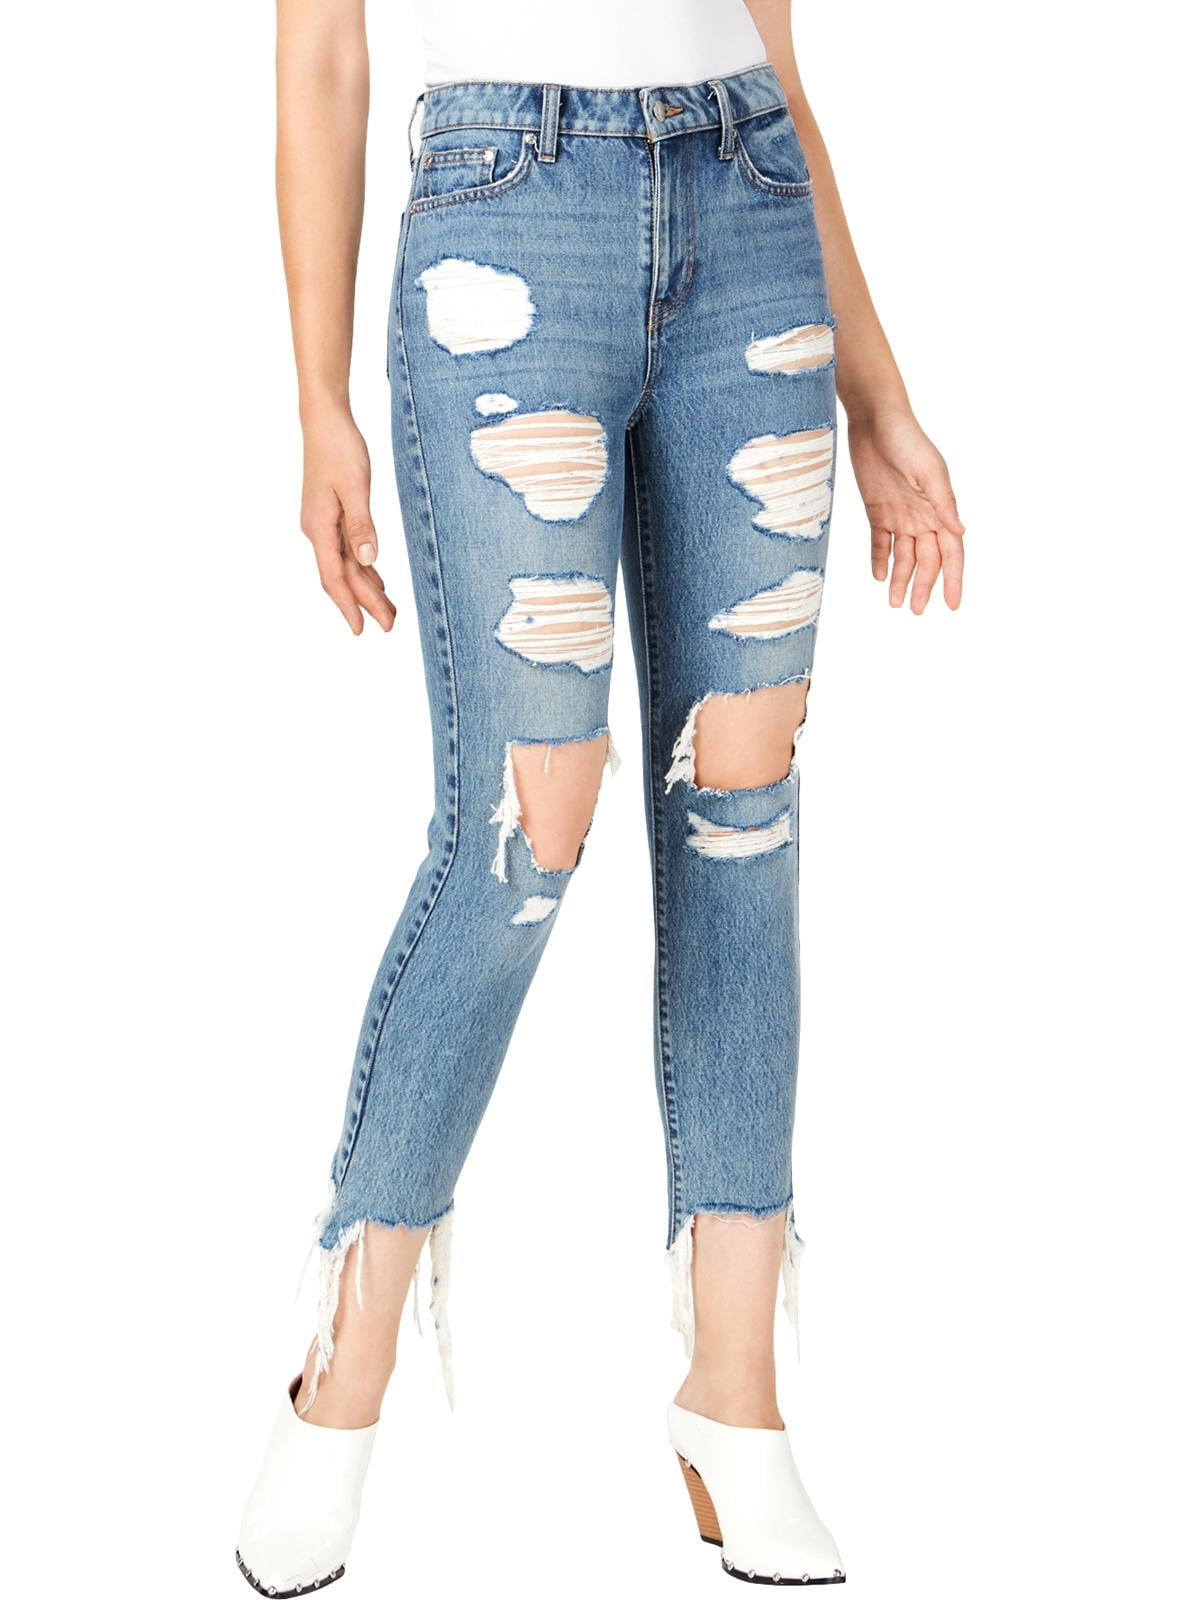 GUESS - Guess Womens Ripped Mid-Rise Skinny Jeans Blue 30 - Walmart.com - Walmart.com